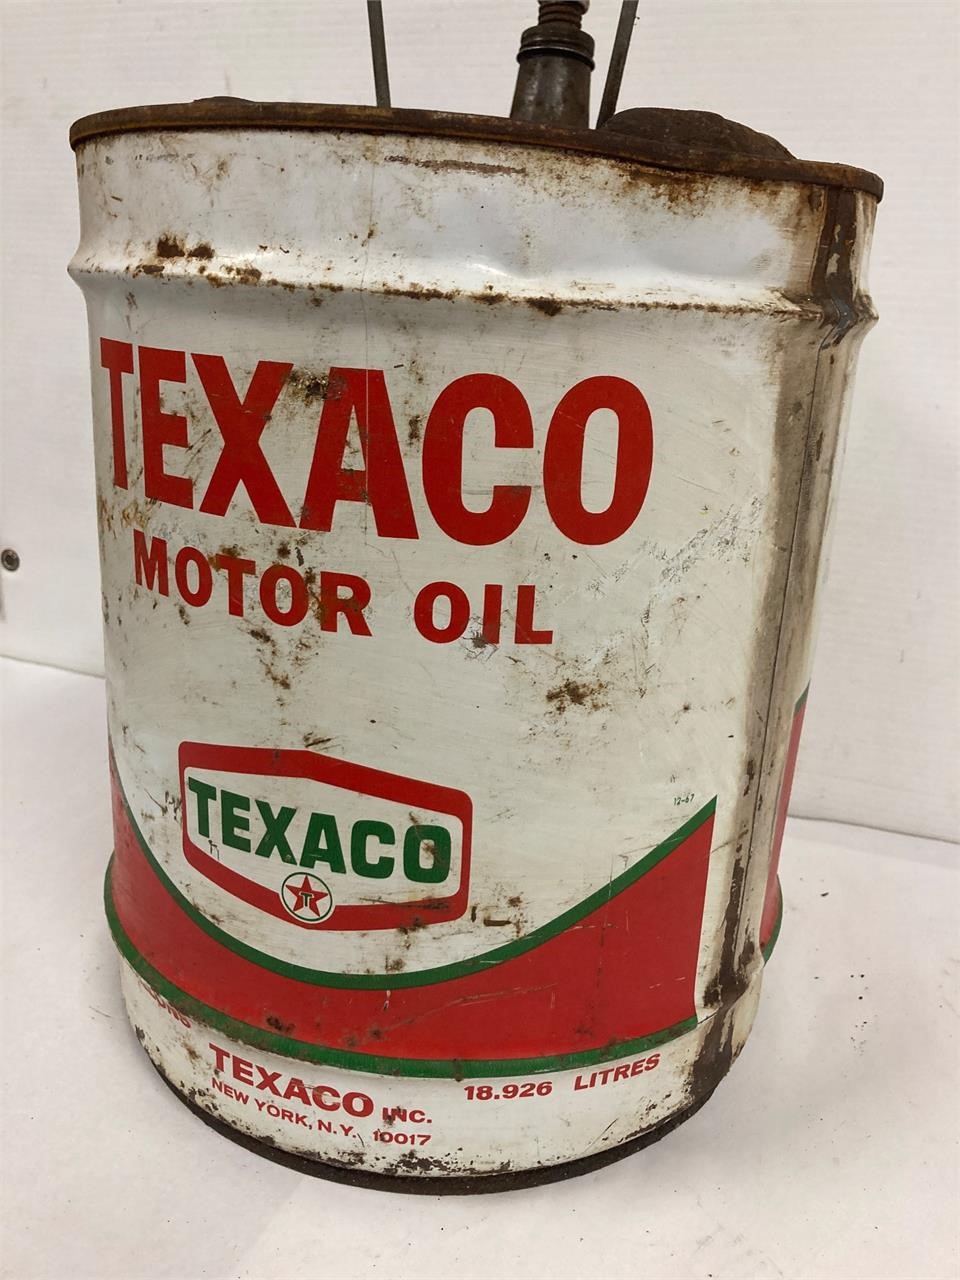 Texaco motor oil pail